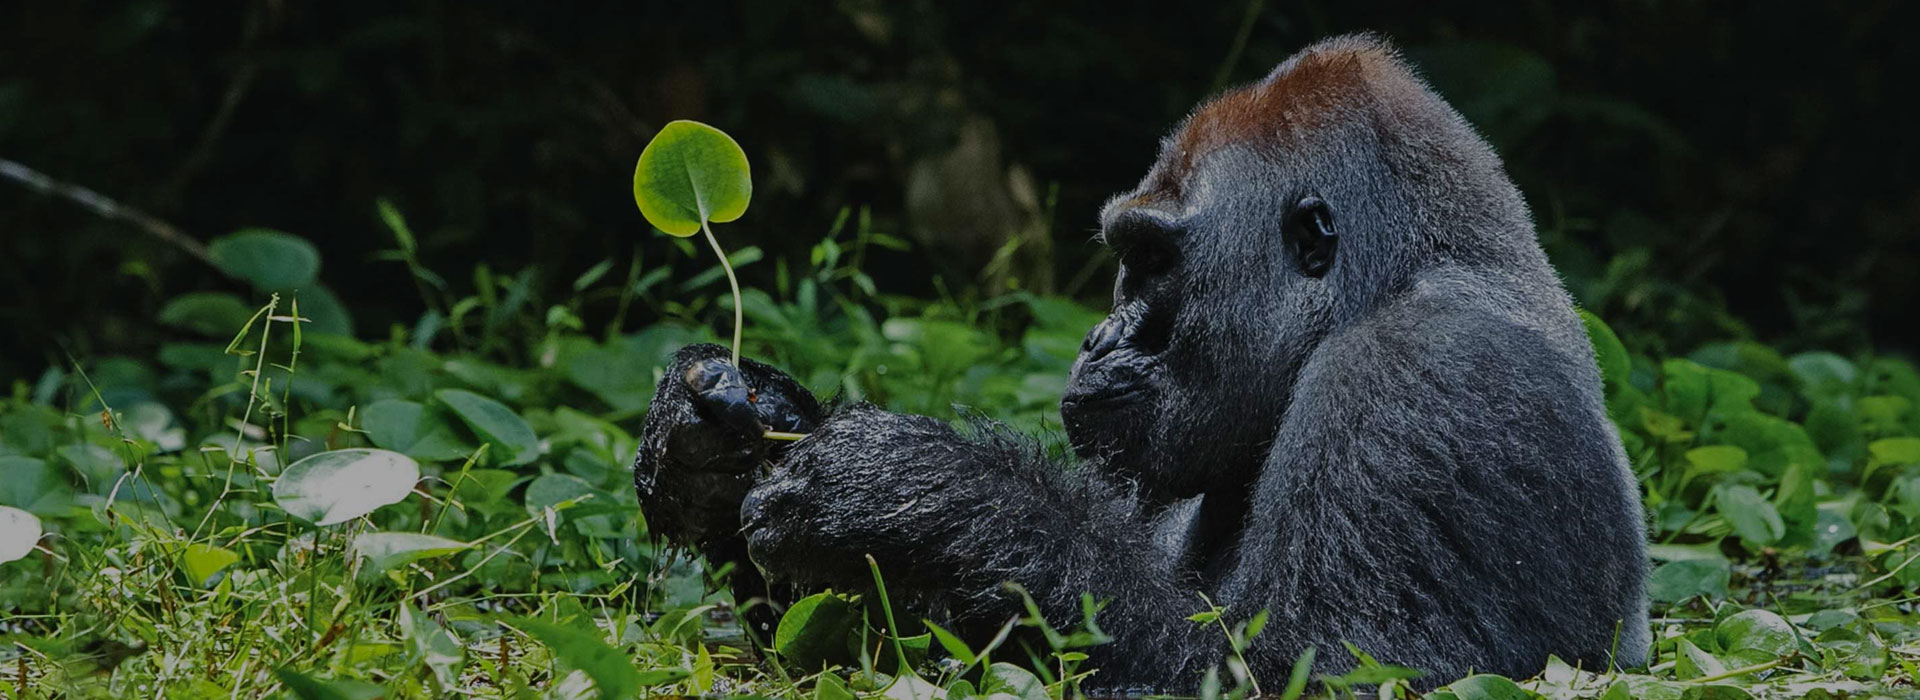 Grand tour of Rwanda gorillas, chimpanzees & other primates